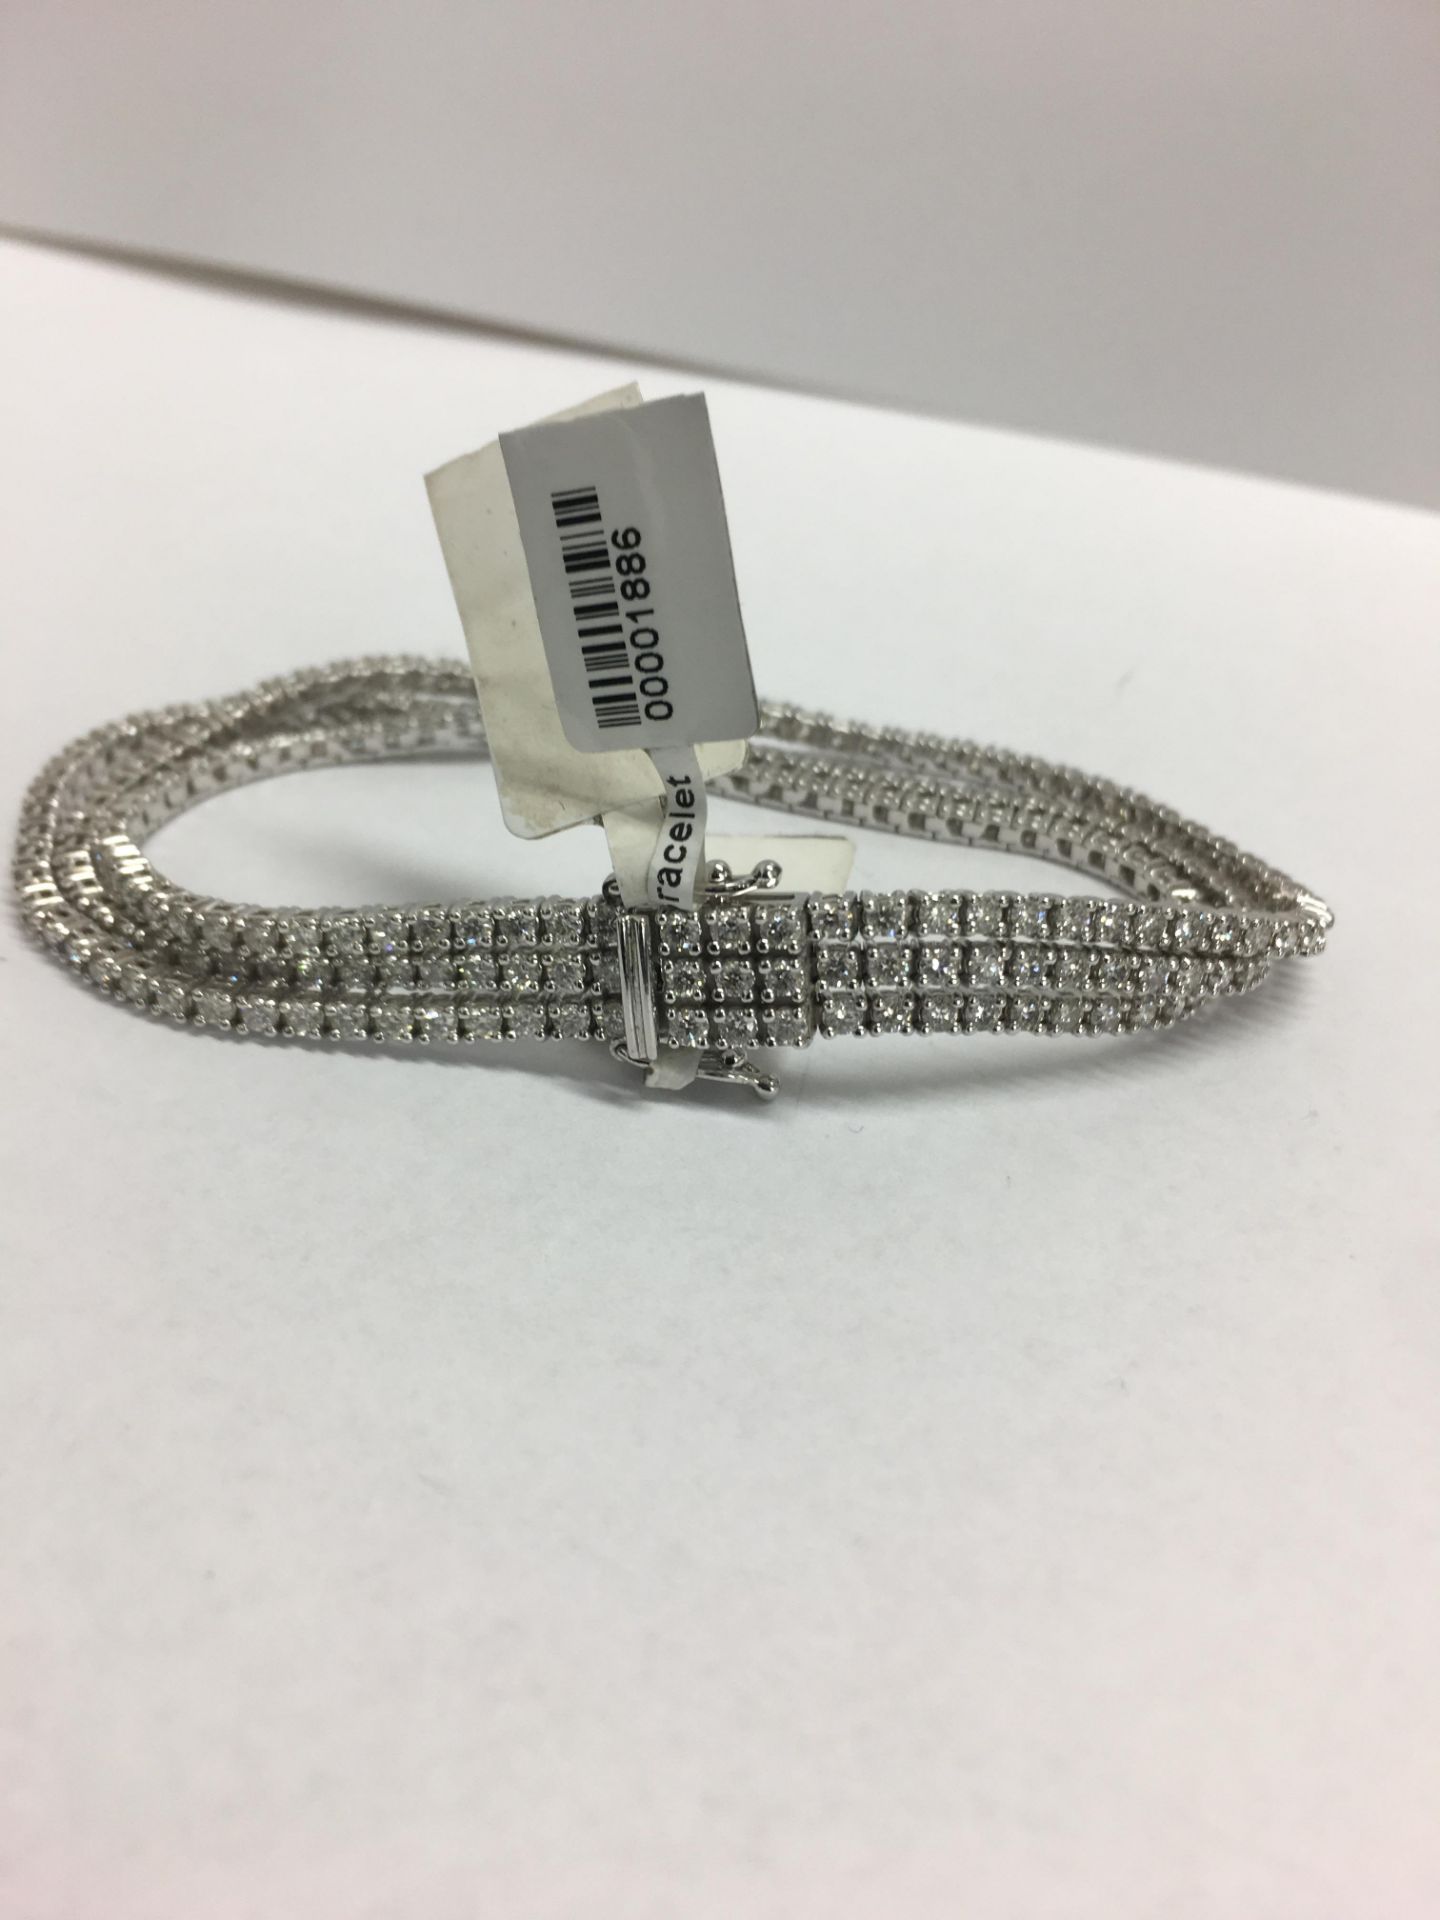 6.20ct diamond bracelet ,h colour si2 diamonds 20gms 18ct white gold uk hallmark ,uk manufacture, - Image 2 of 3